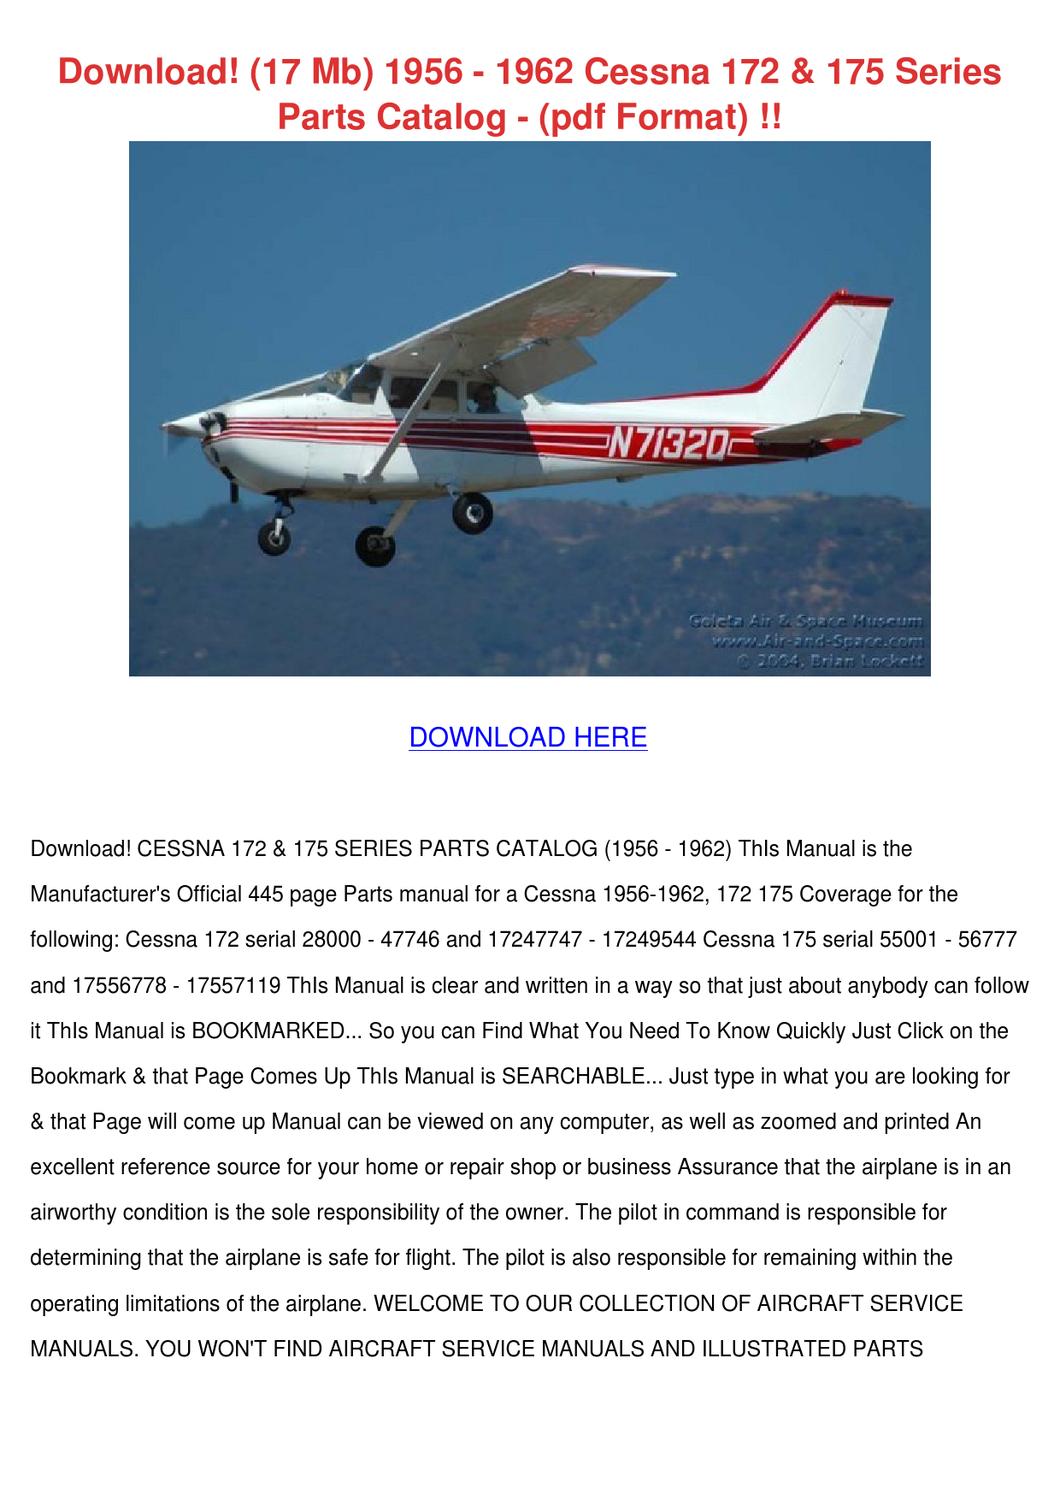 Pilot operating handbook pdf